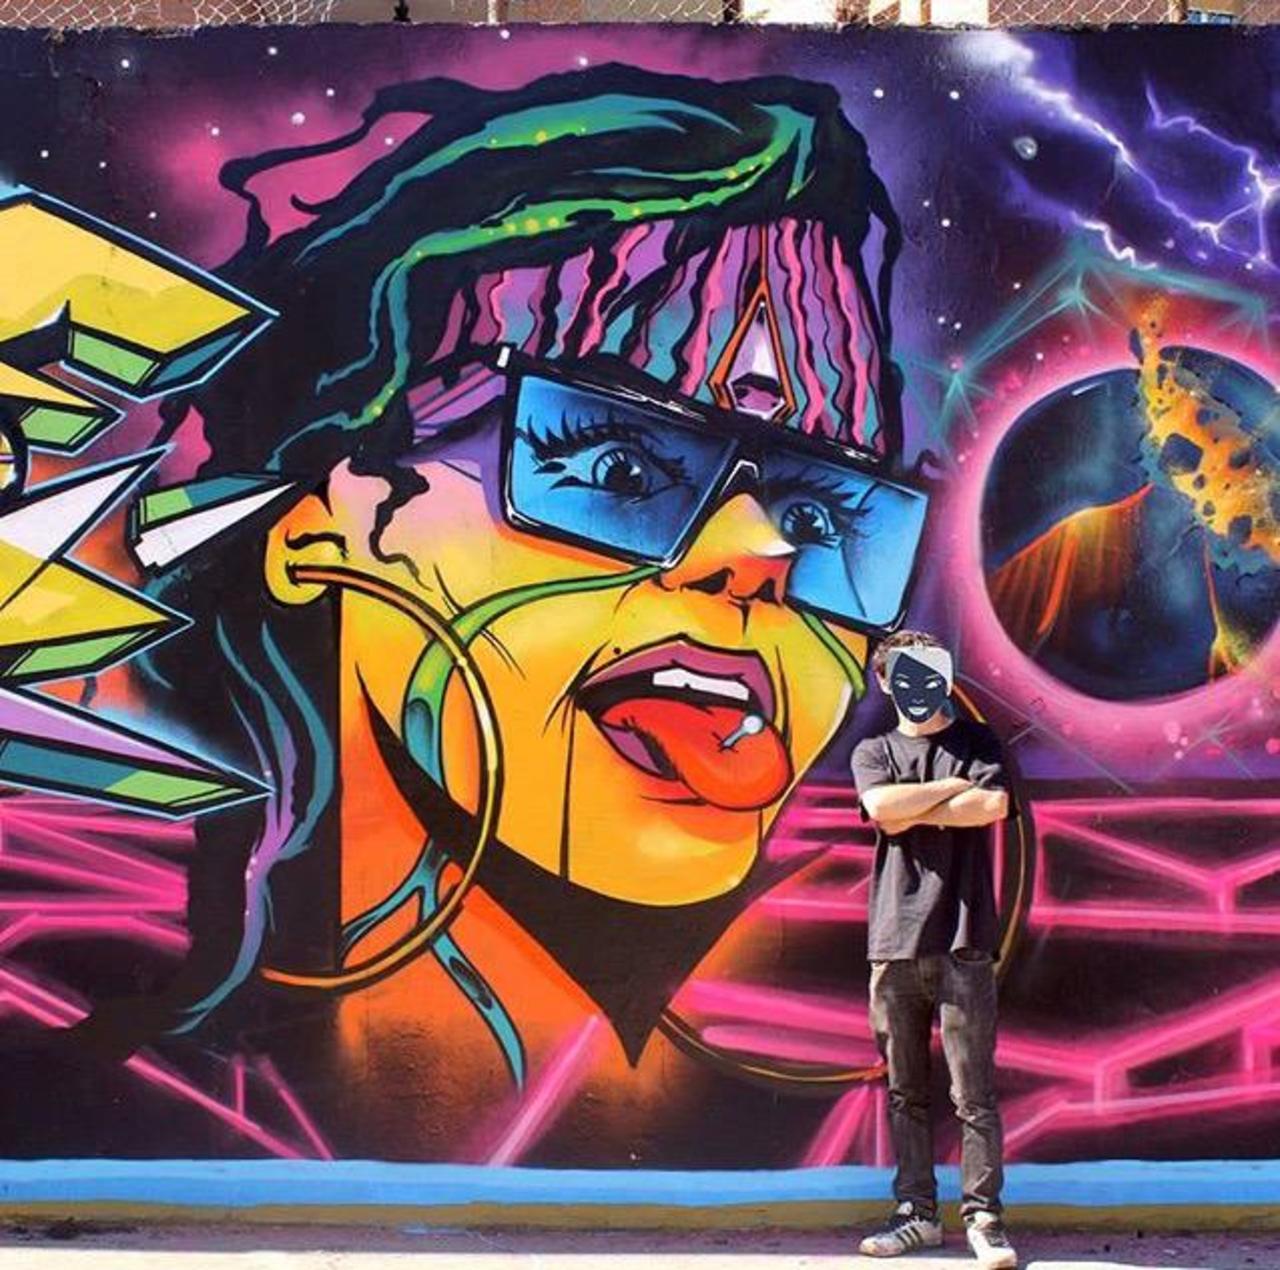 RT @GoogleStreetArt: Brilliant new Street Art by the artist Jaycaes

#art #graffiti #mural #streetart http://t.co/R1nhXCF0qG